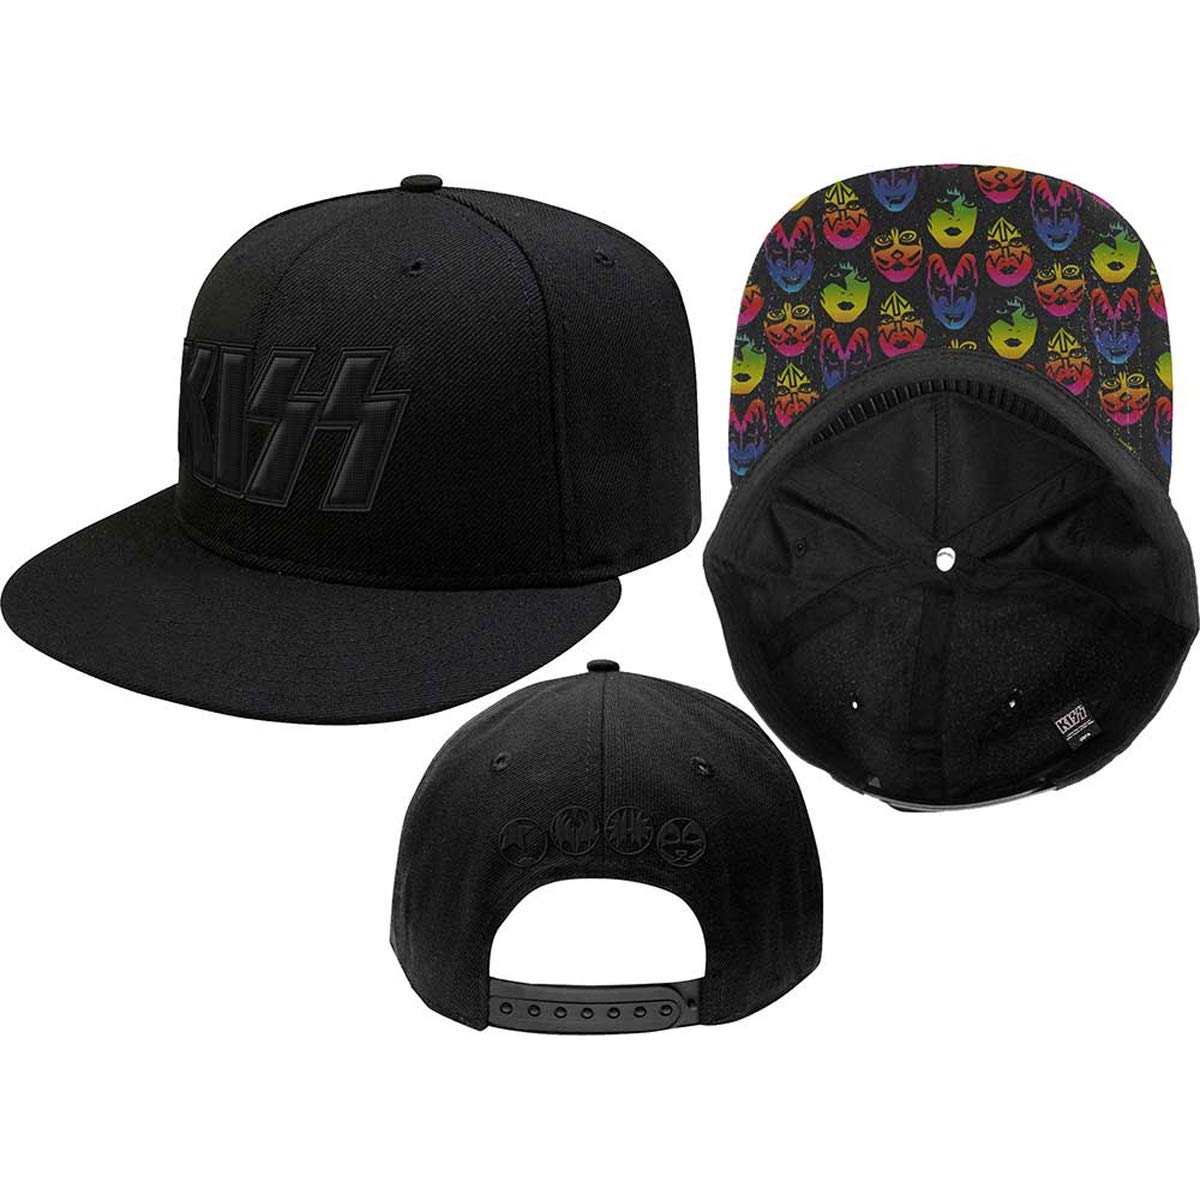 KISS Black Neon Faces Snapback Hat - Official Band Merchandise